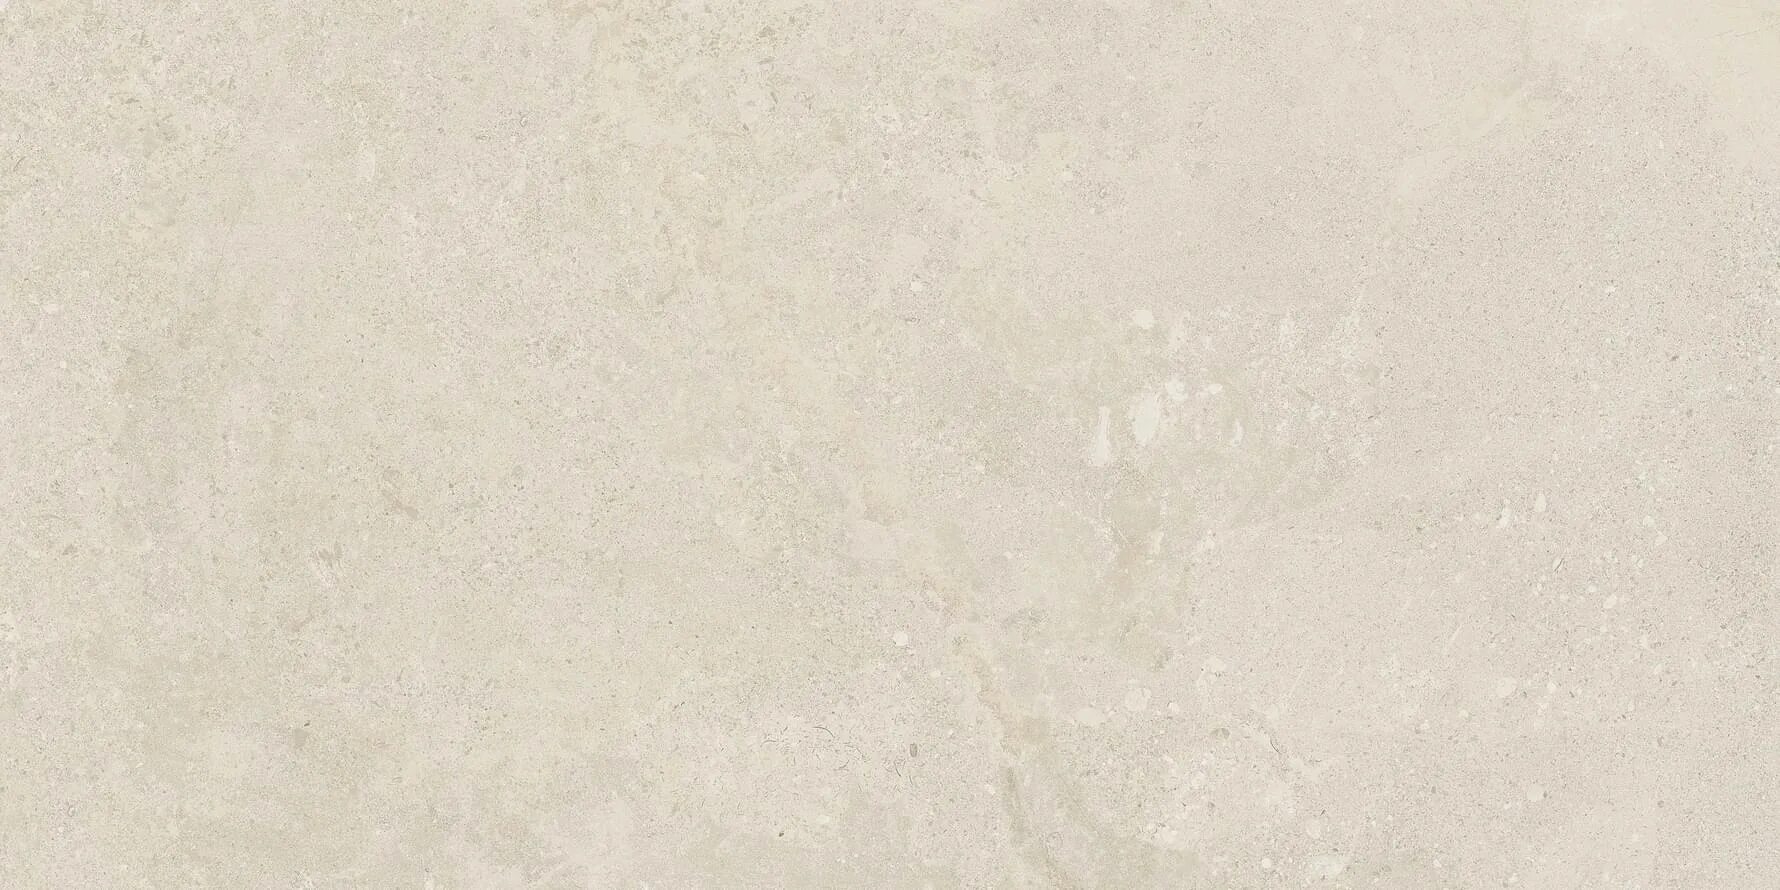 Уайт Стоун патинированный. Плитка Fulei Stone White limestone. Italon White Stone 60*120*9 / Уайт Стоун. Белый камень 57805-77а пленка ПВХ. Уайт стоун